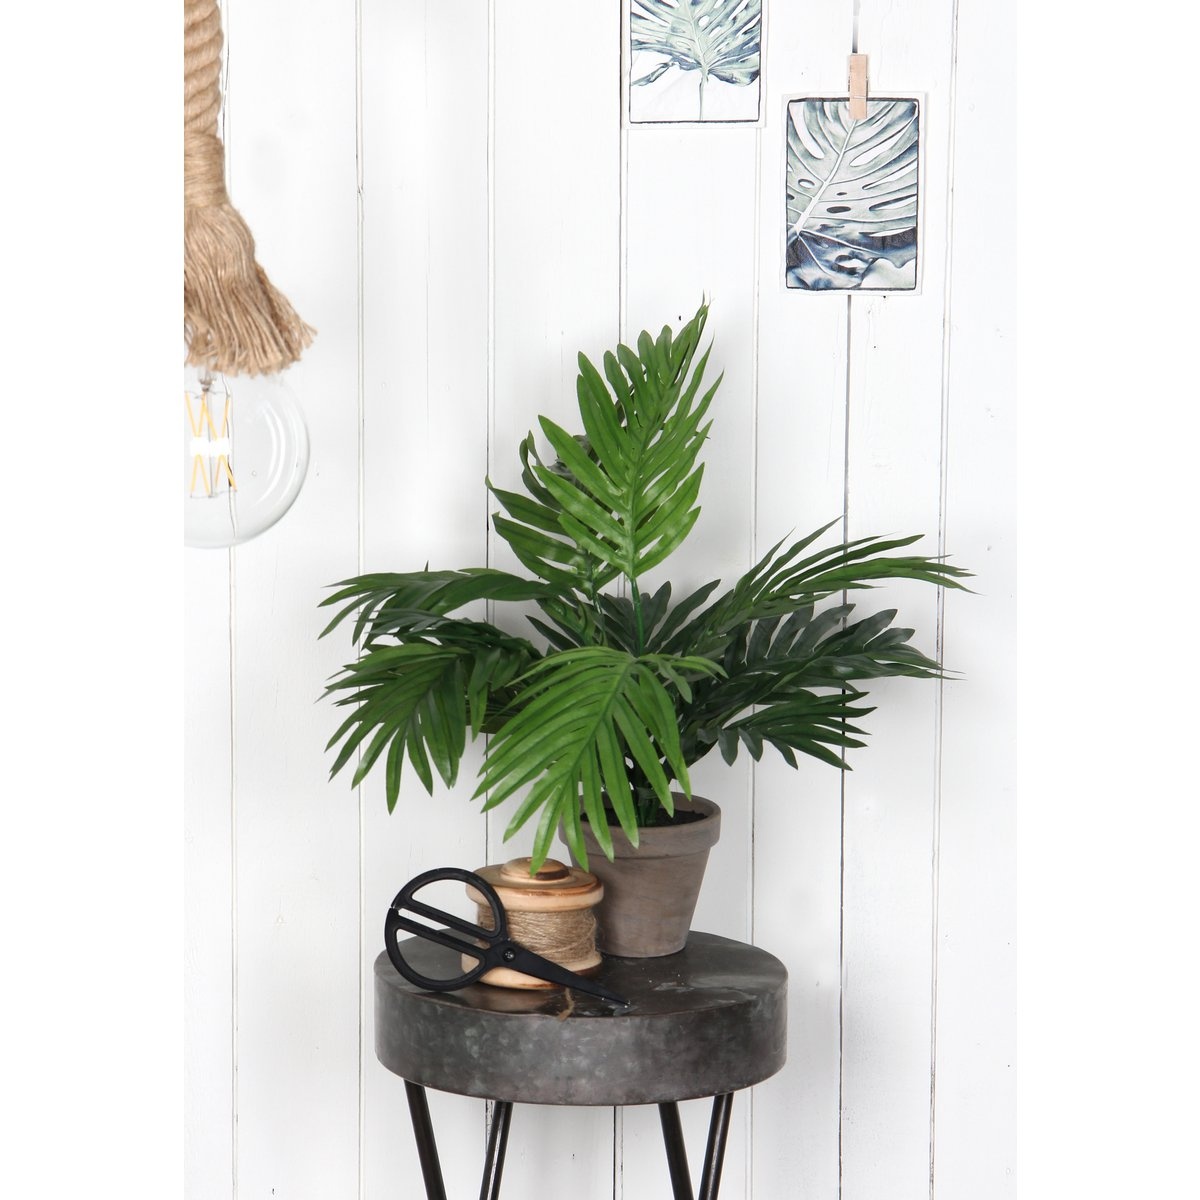 KantoormeubelenPlus Areca Palm Kunstplant in Bloempot Stan - H45 x Ø60 cm - Groen